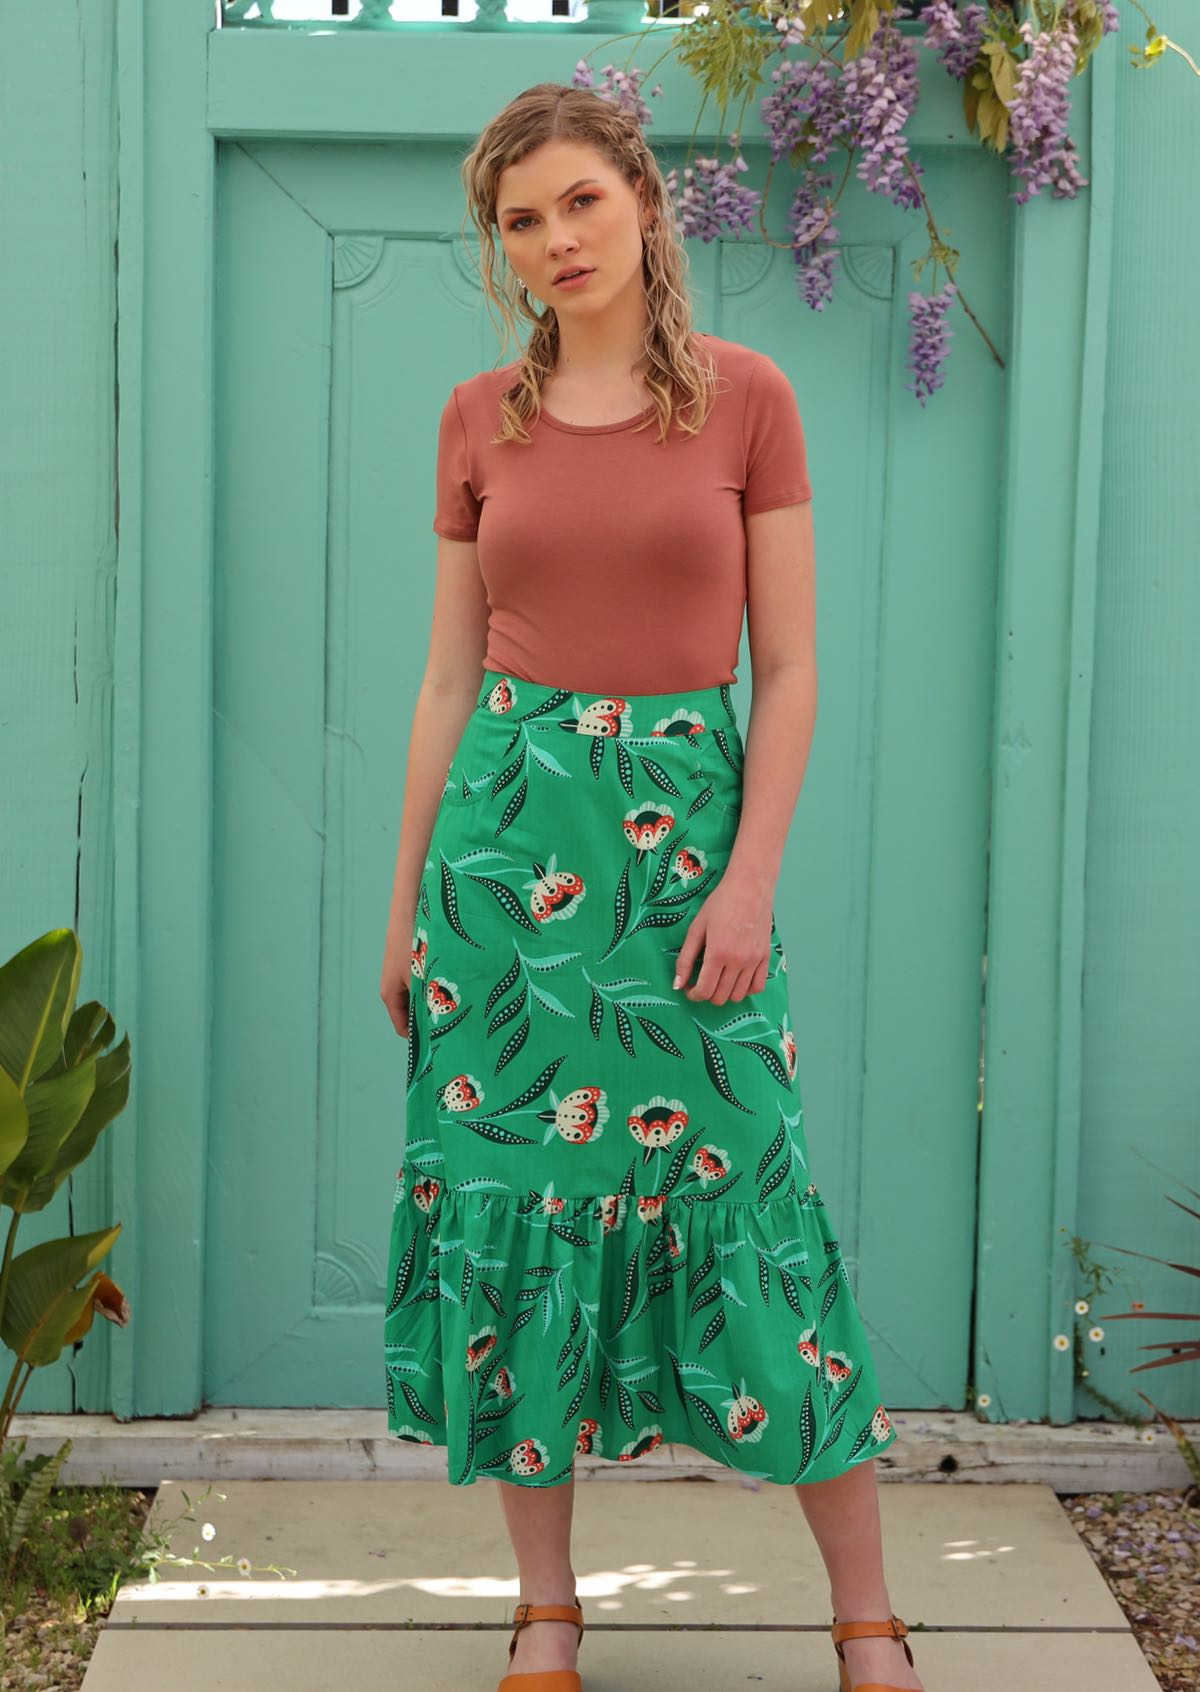 Model wears mint green pencil skirt with ruffle